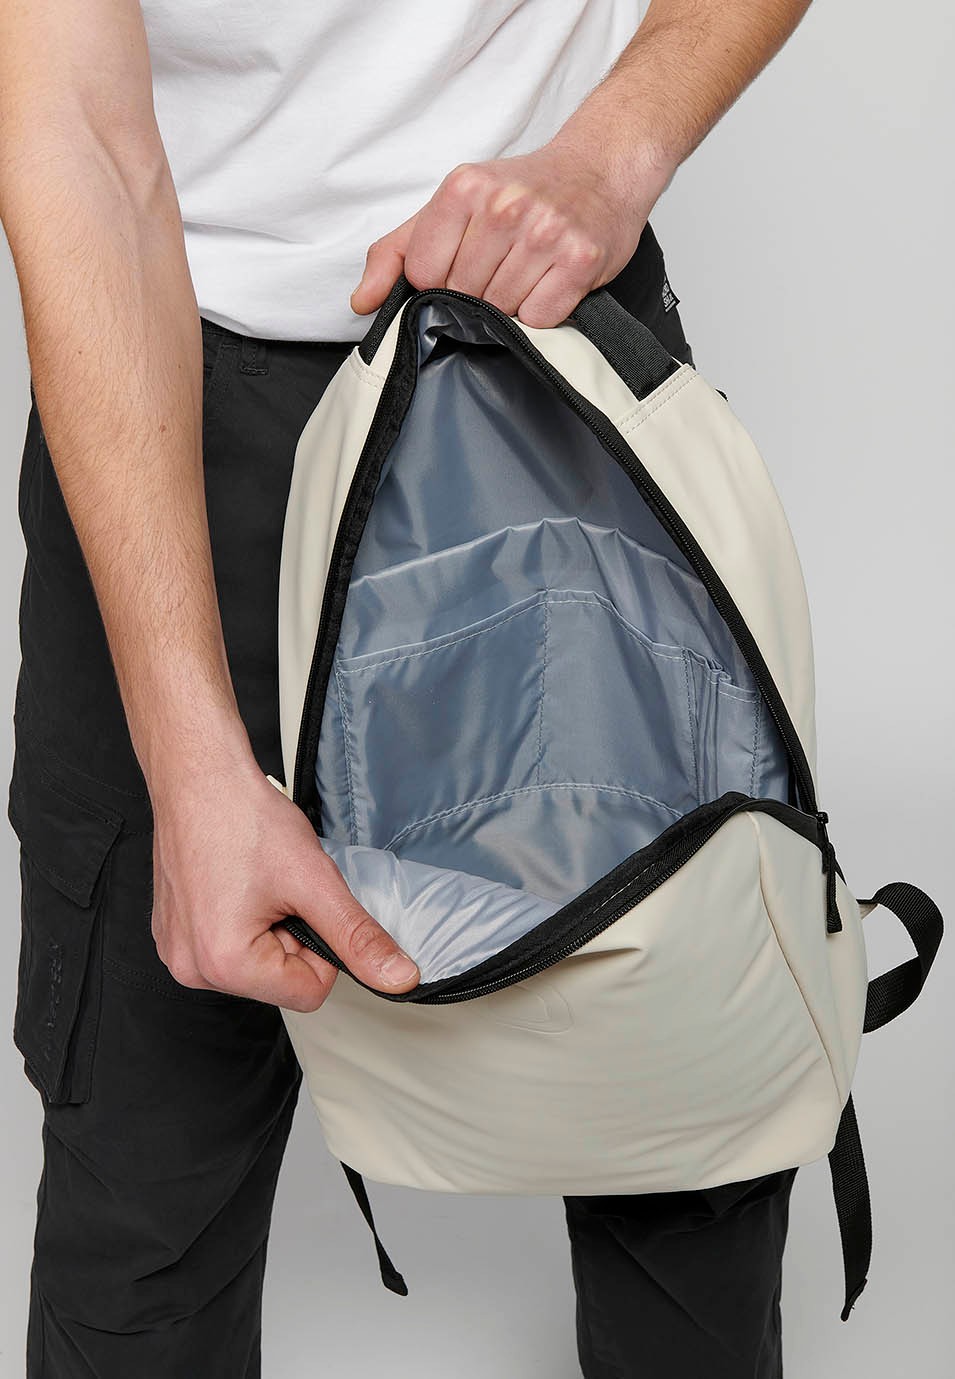 Koröshi Backpack with zipper closure and interior laptop pocket in Ecru color 6